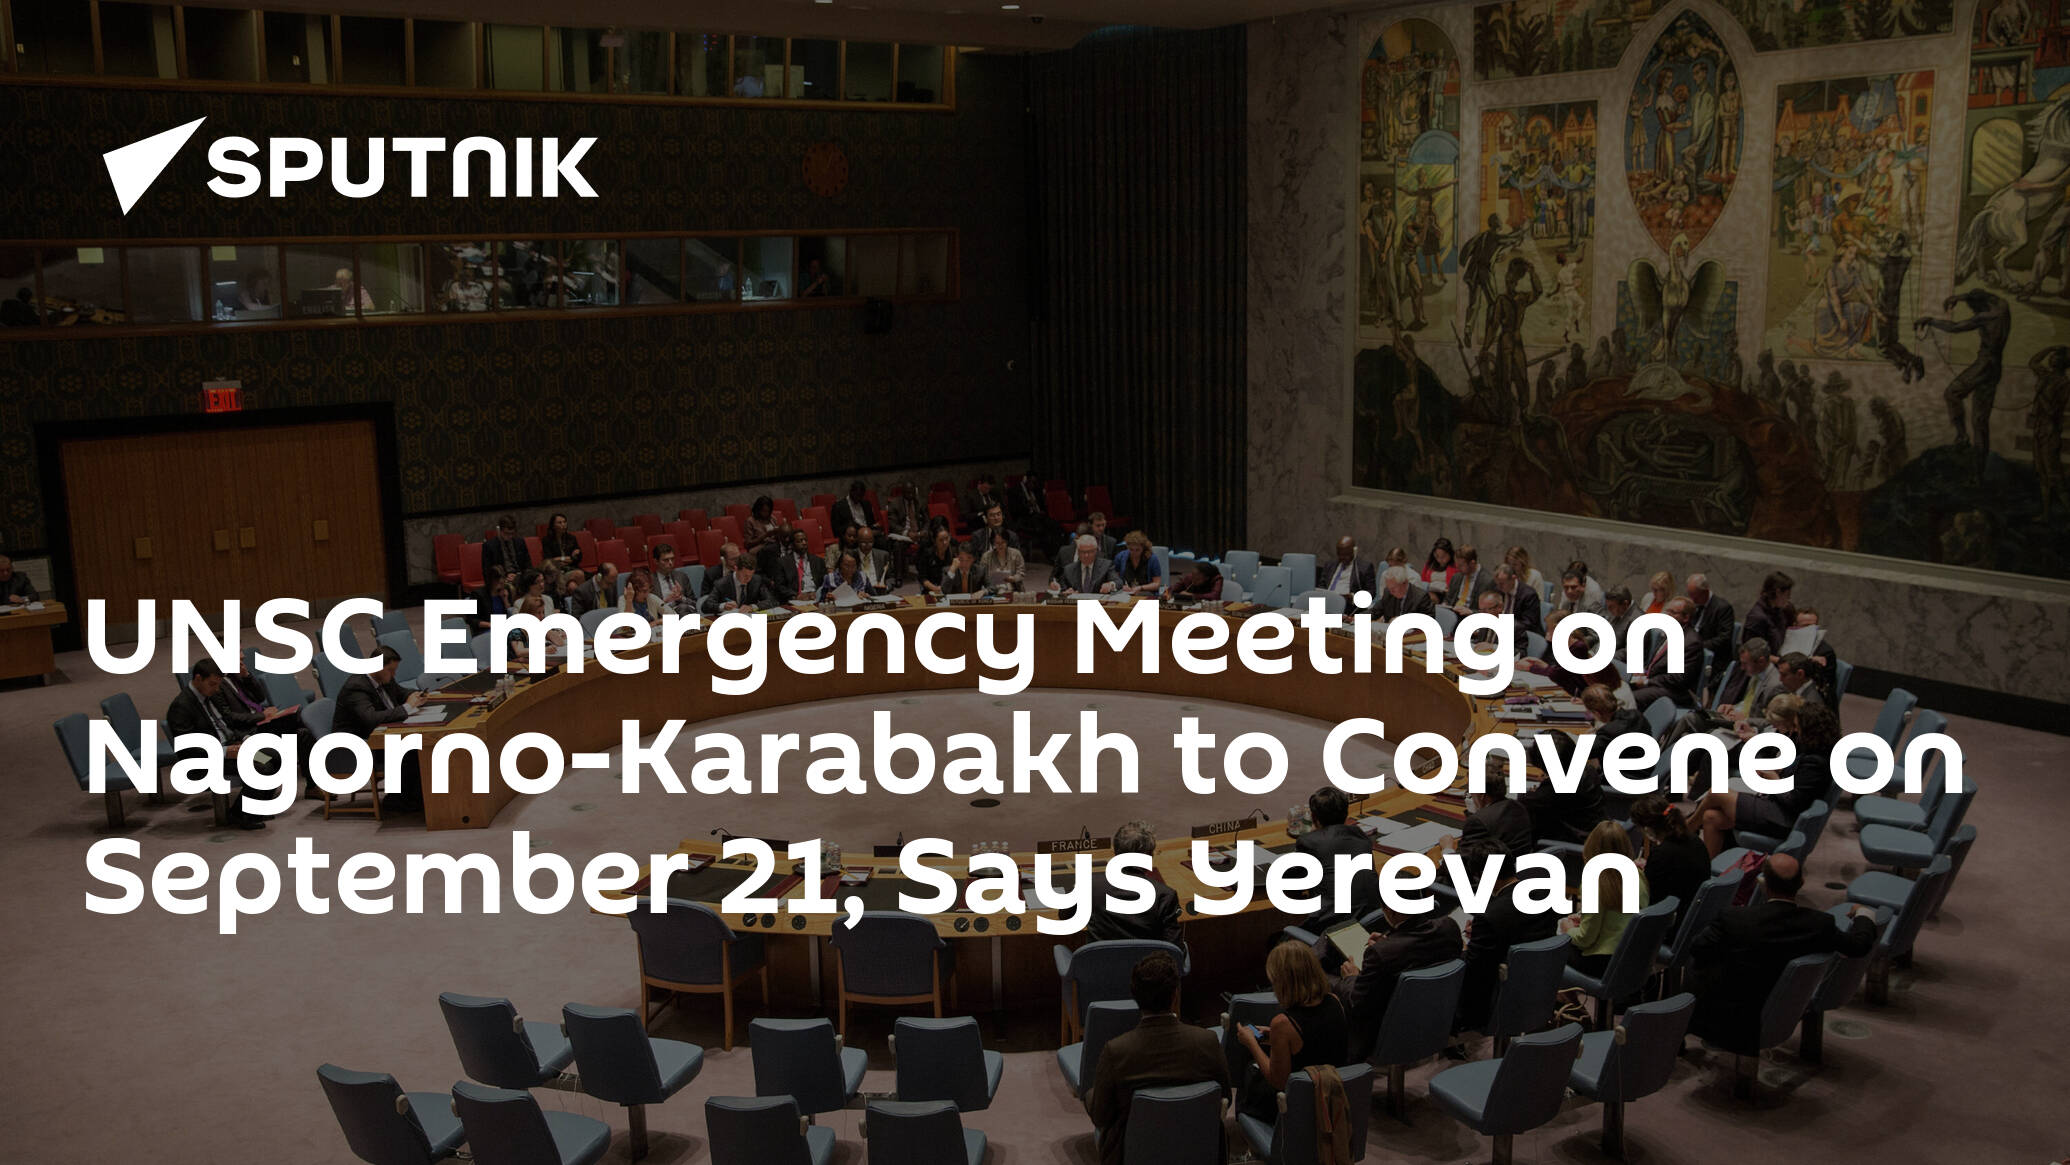 UNSC Emergency Meeting on Nagorno-Karabakh to Convene on September 21, Says Yerevan